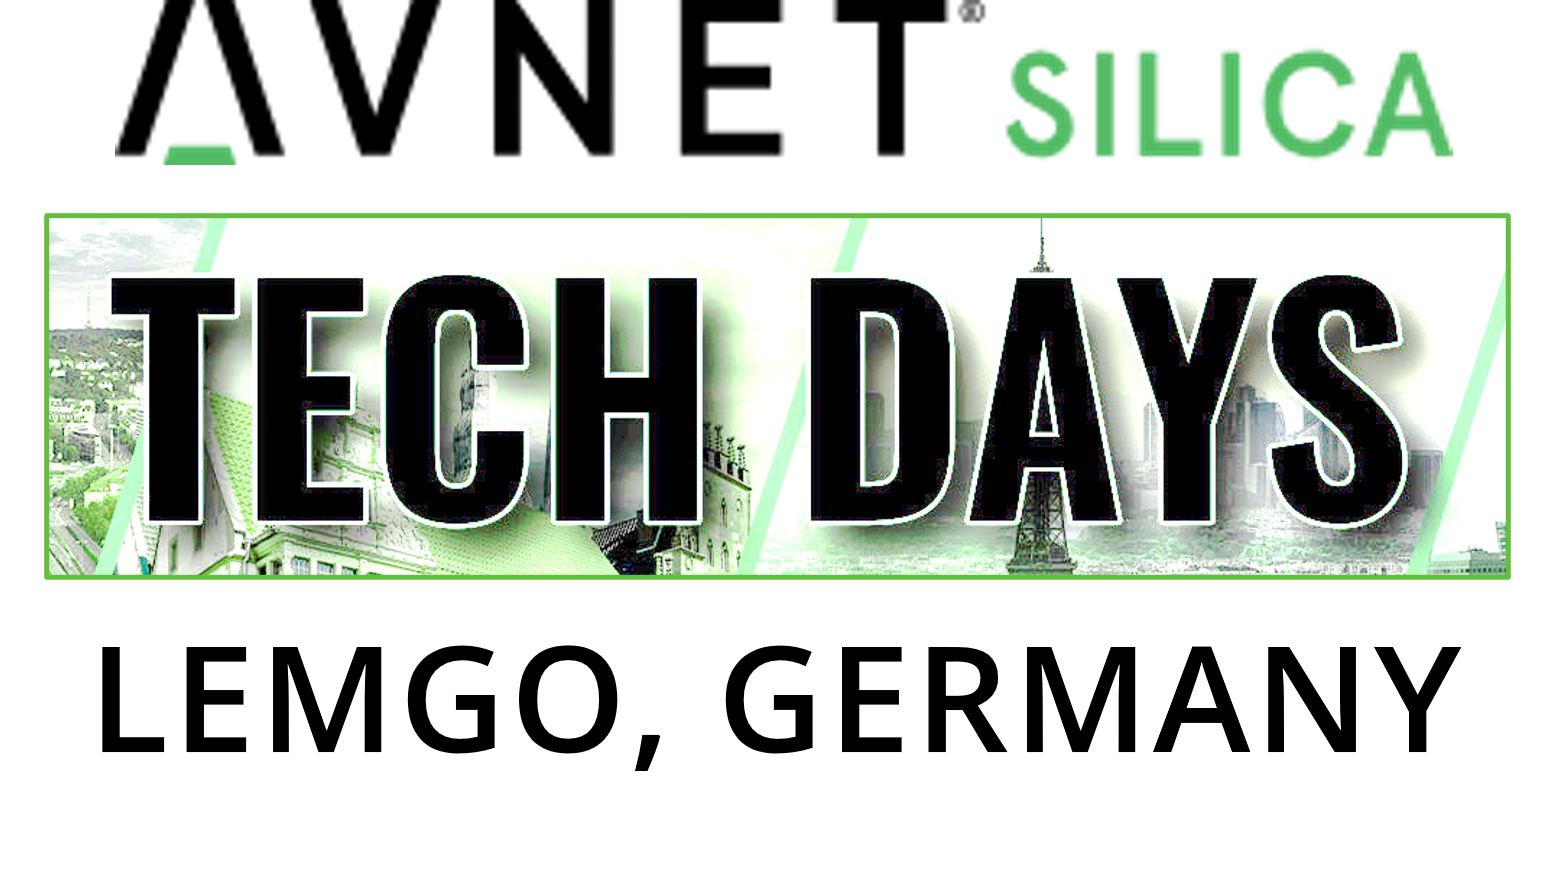 Avnet Silica Tech Day Germany